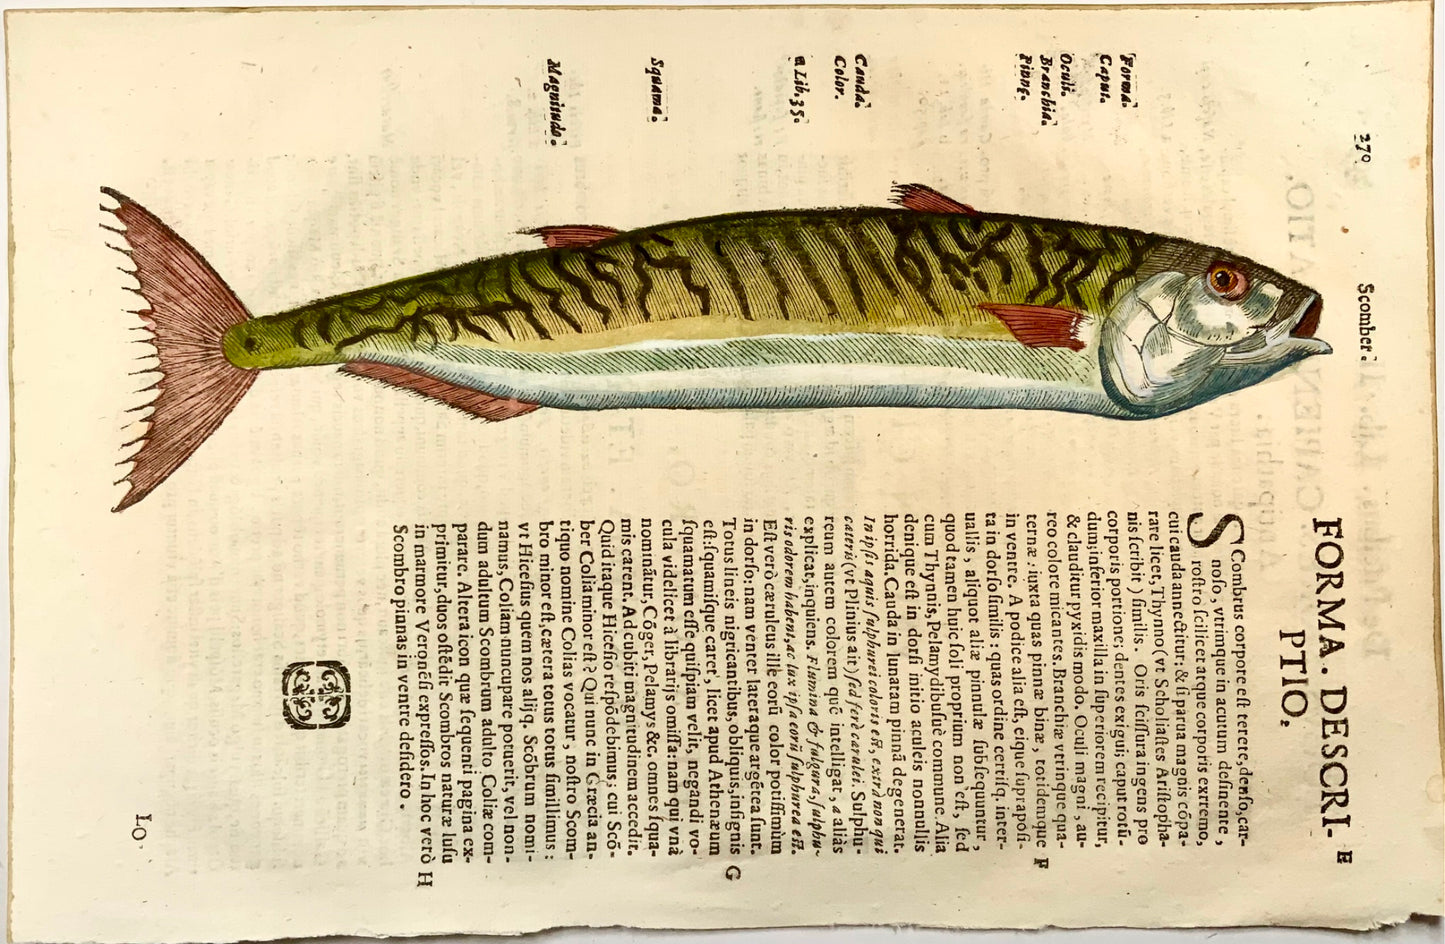 1638 Atlantic Mackerel, fish, Aldrovandi, large folio leaf with woodcut